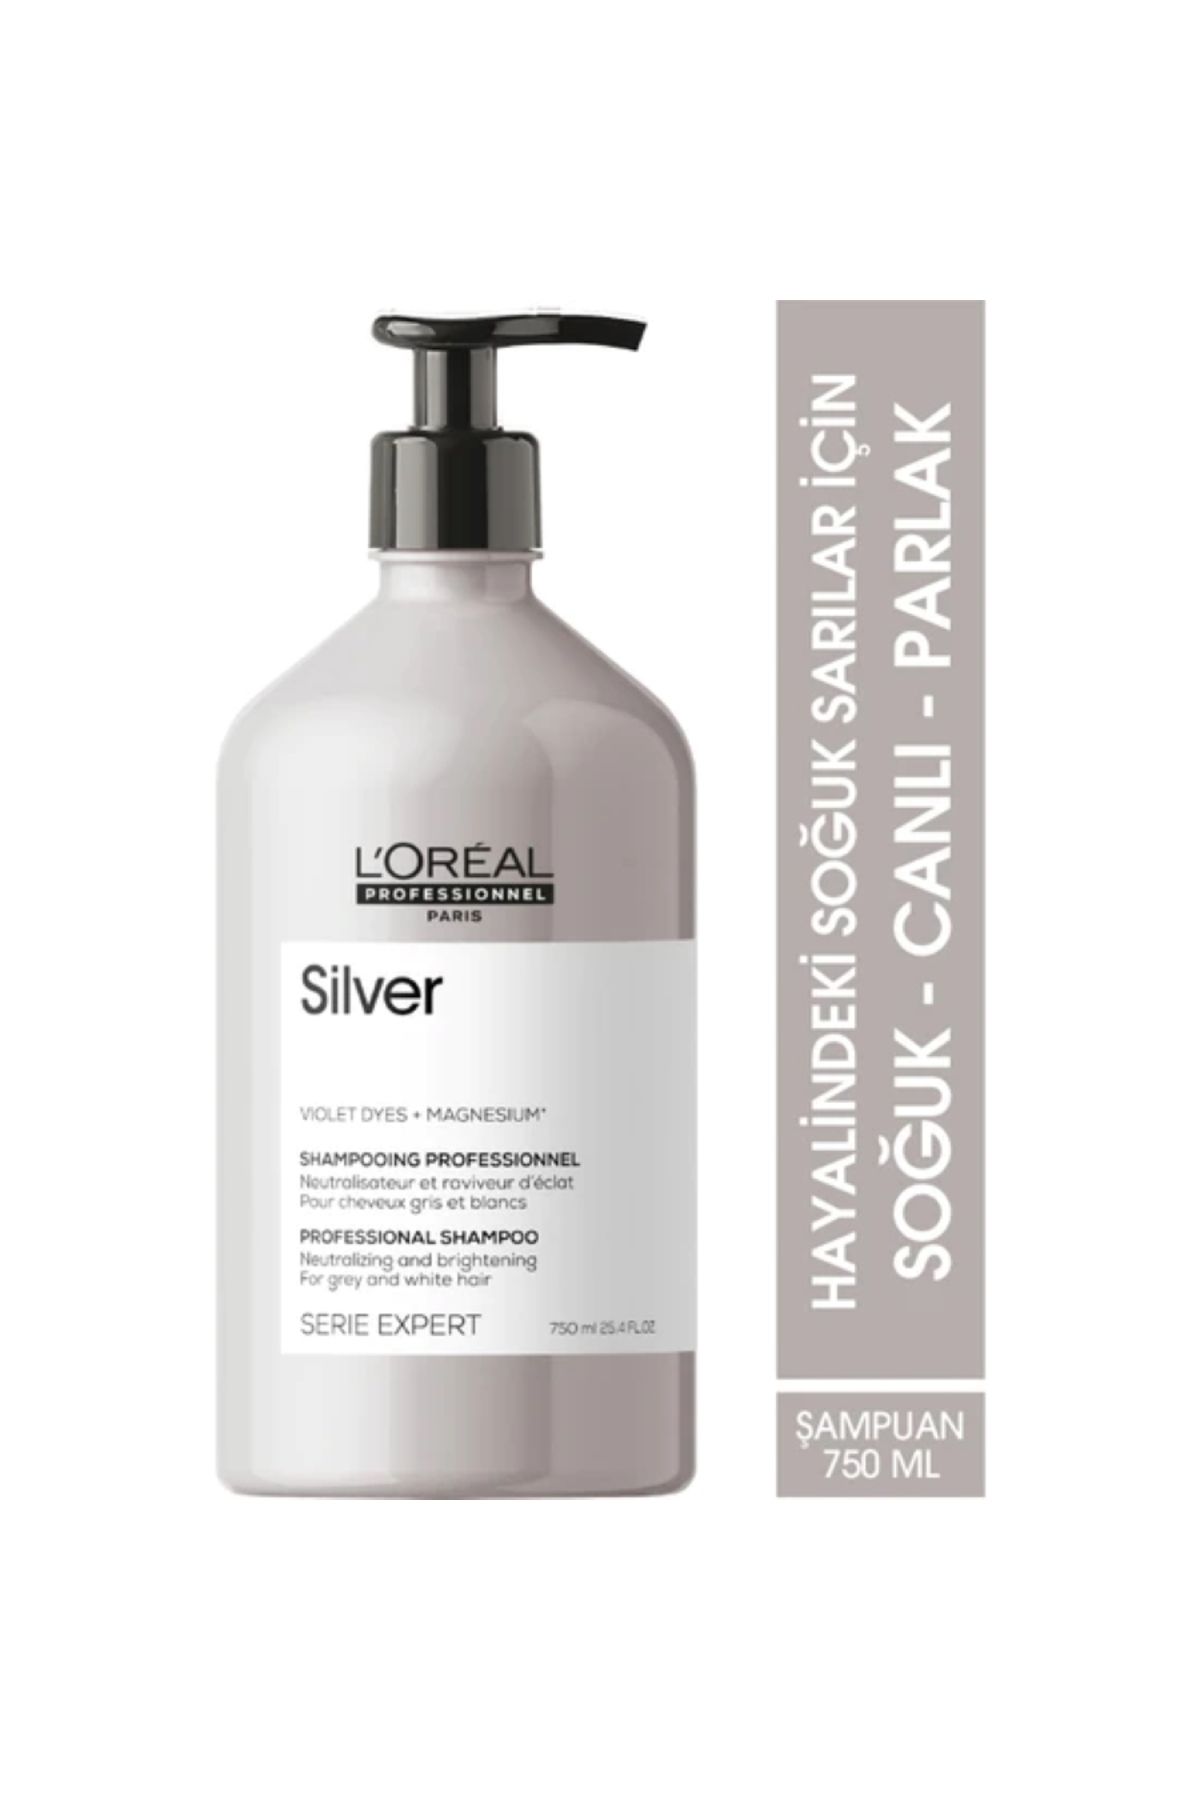 L'oreal Professionnel Loreal Paris Loreal Serie Expert Silver Turuncu Yansımalar İçin Mor Şampuan Şampuan 750 ml CYT7974